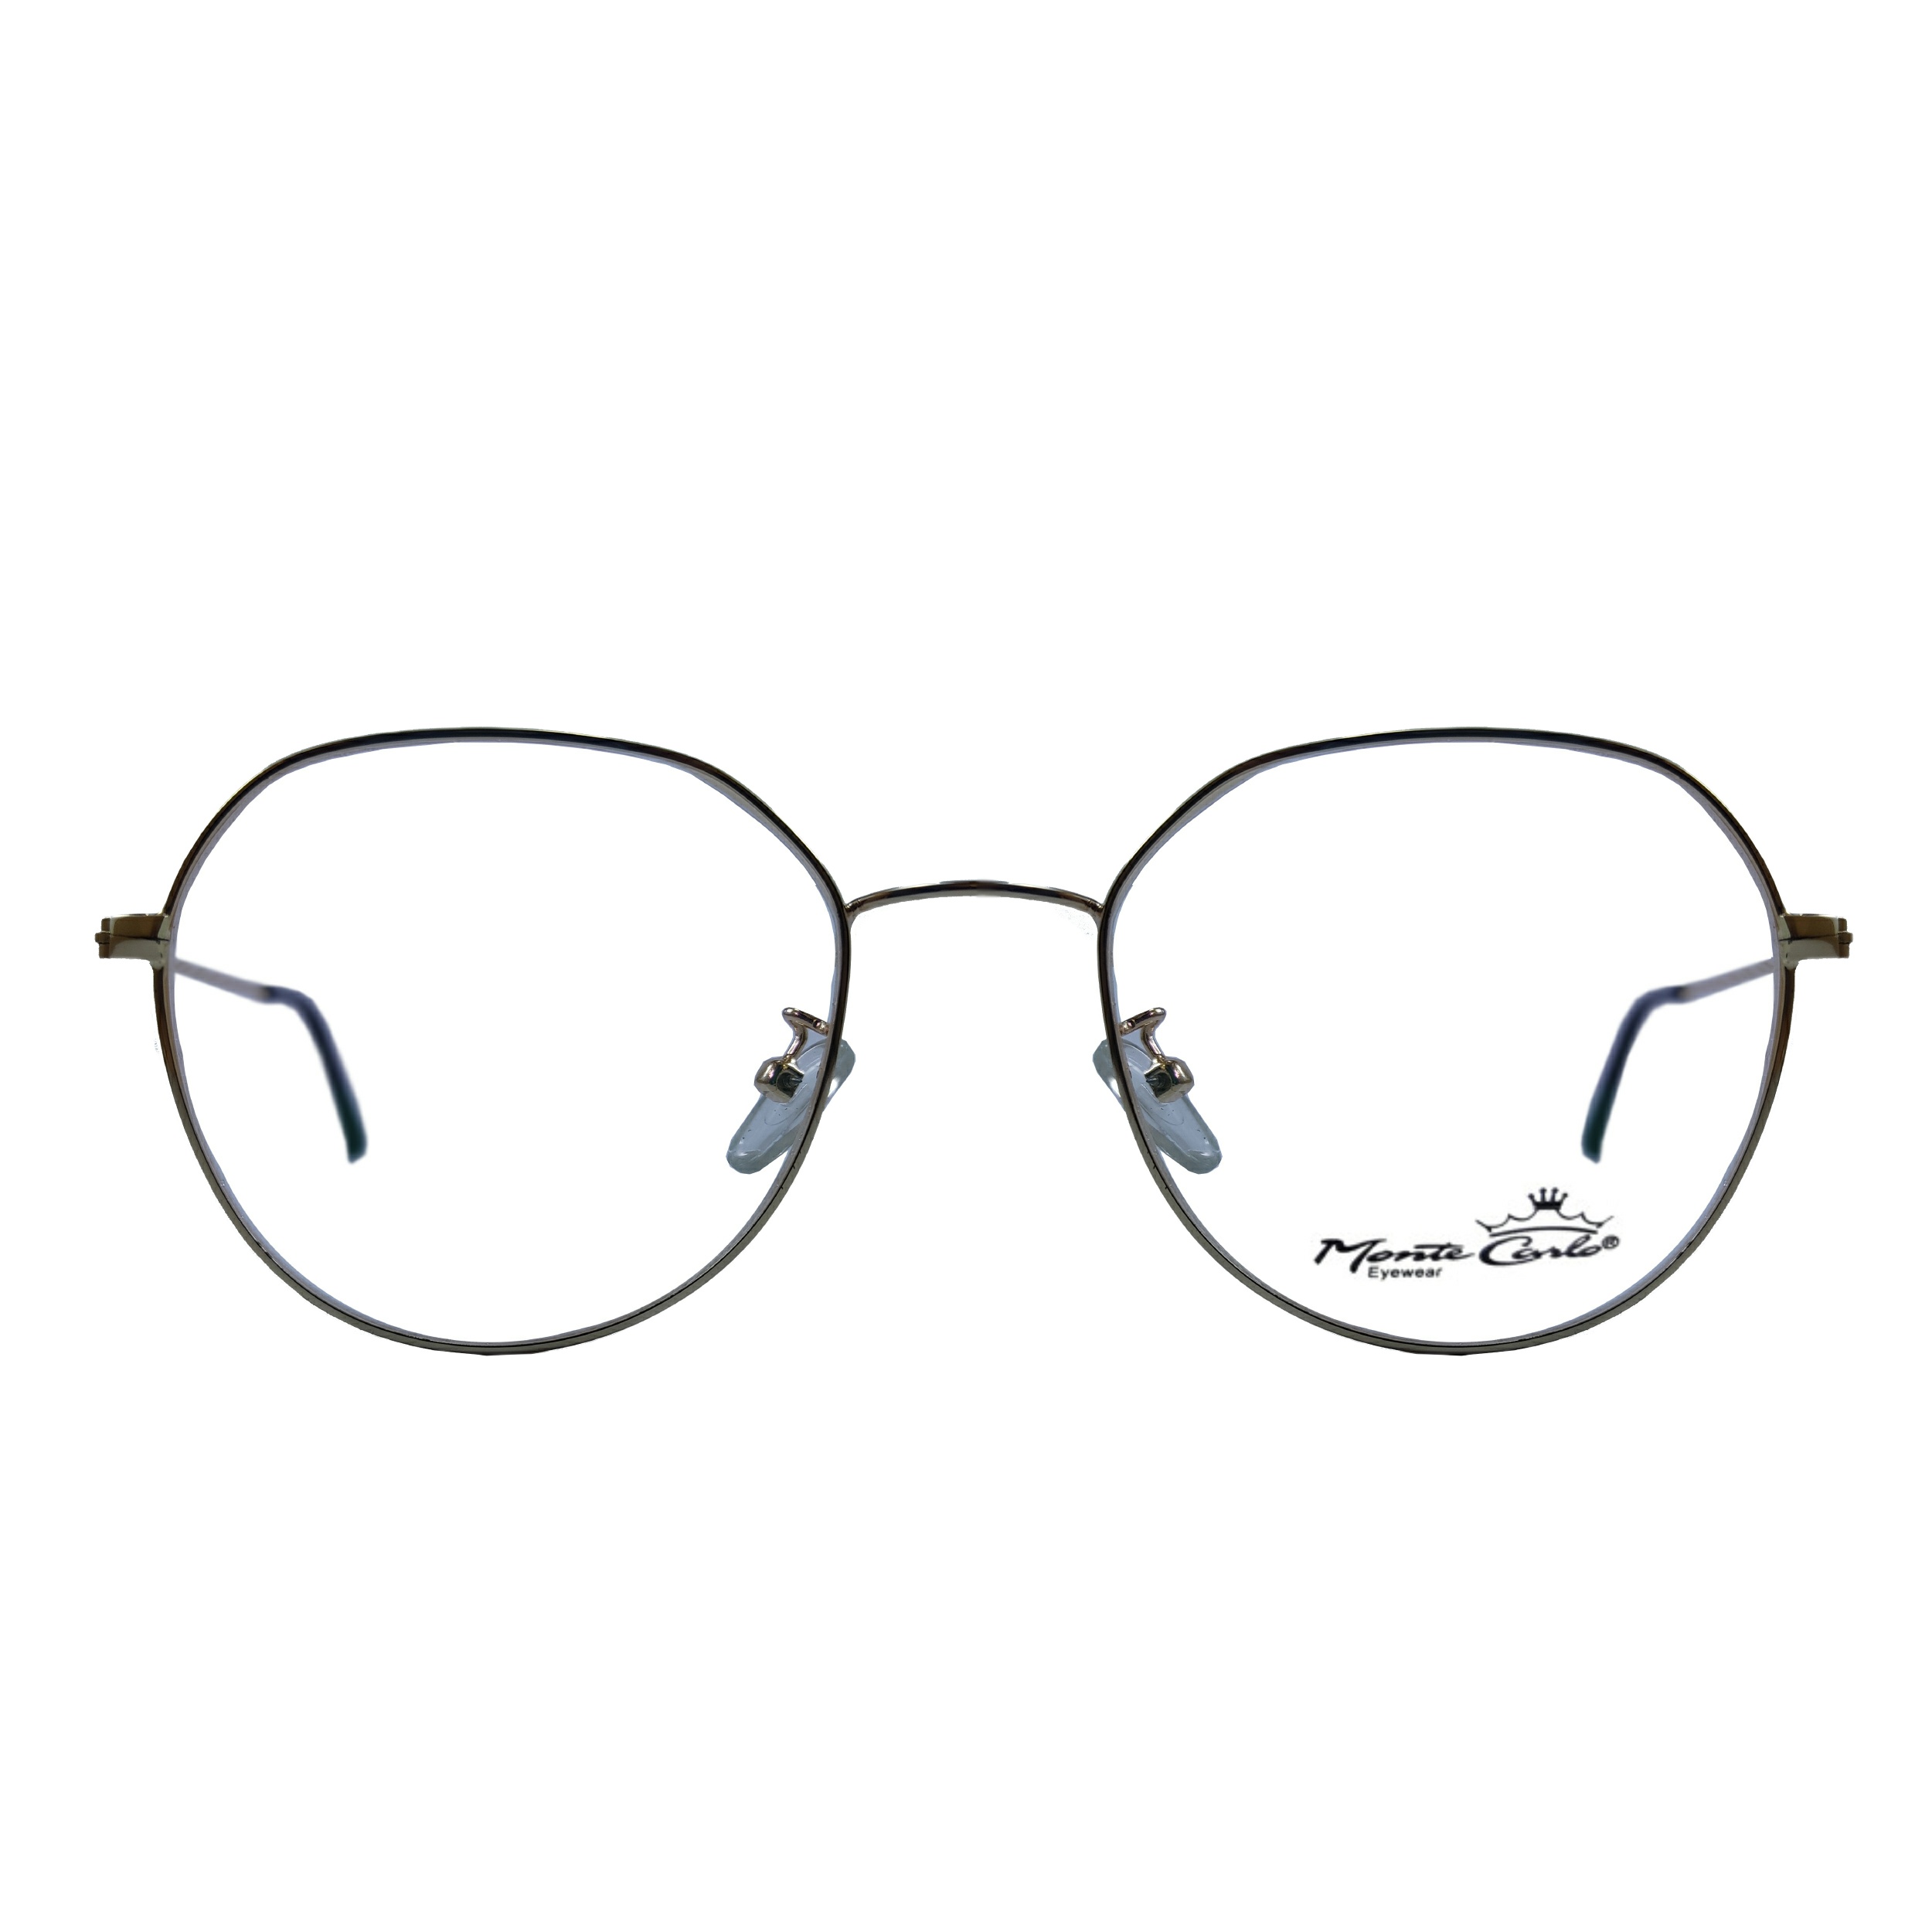 فریم عینک طبی مونته کارلو مدل 5960 کد 111